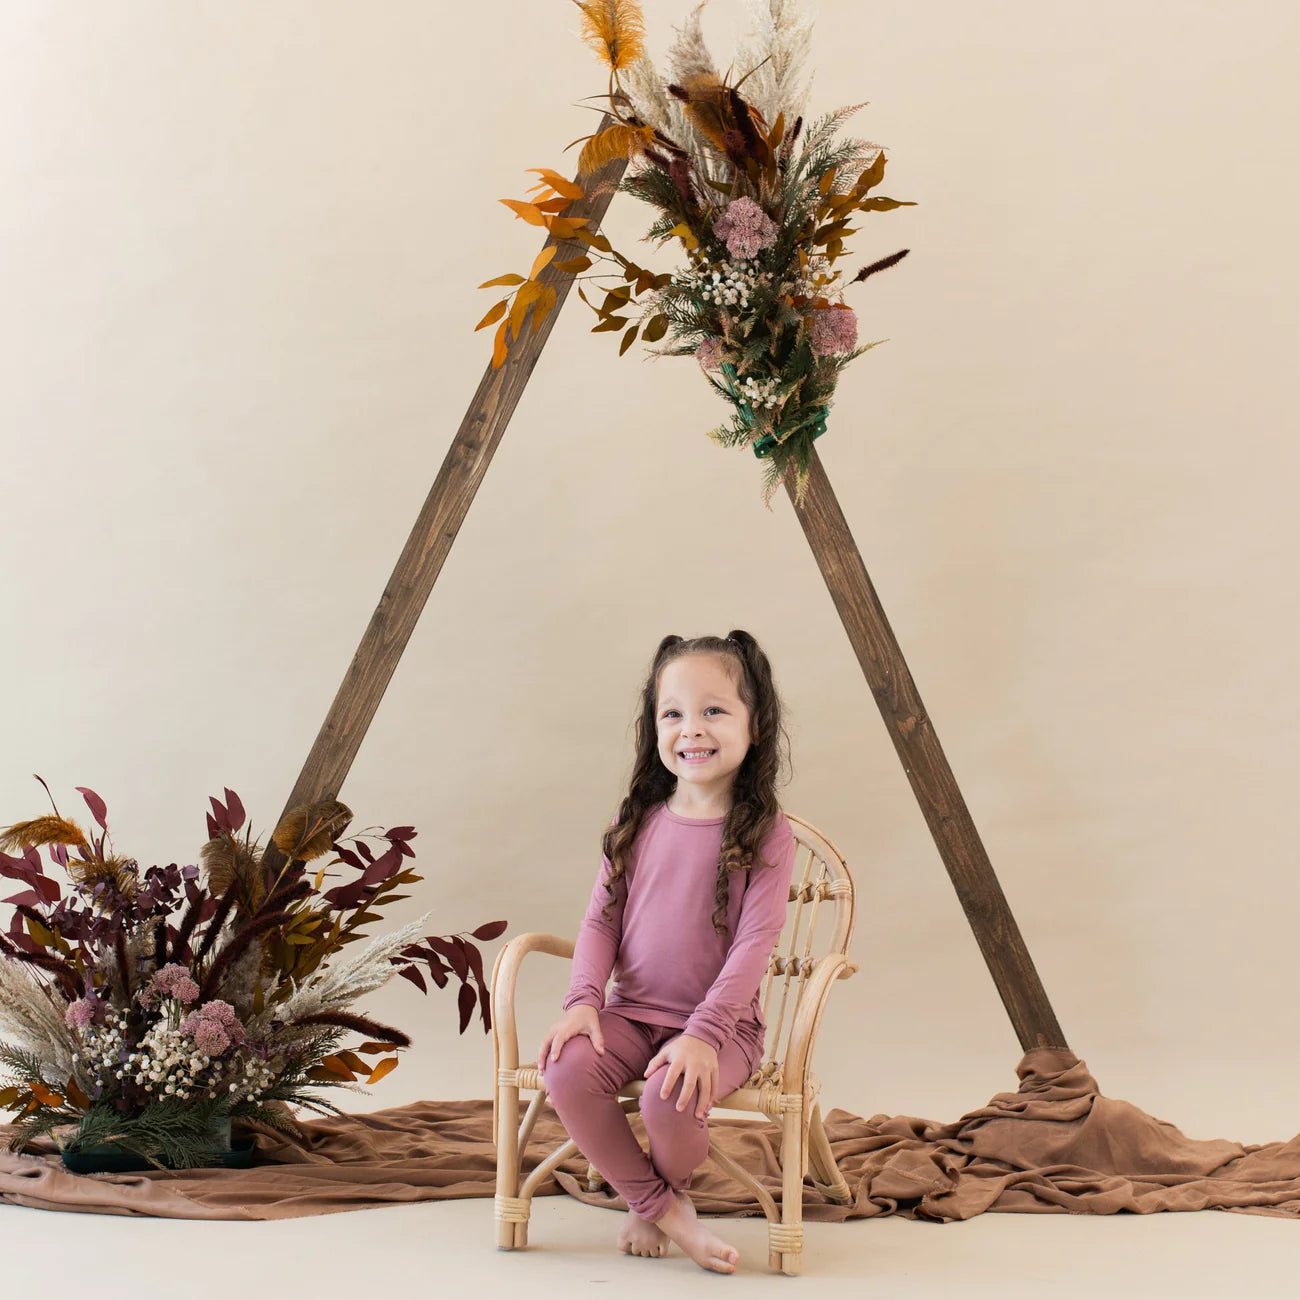 Kyte BABY Toddler Pajama Set in Rose – Blossom